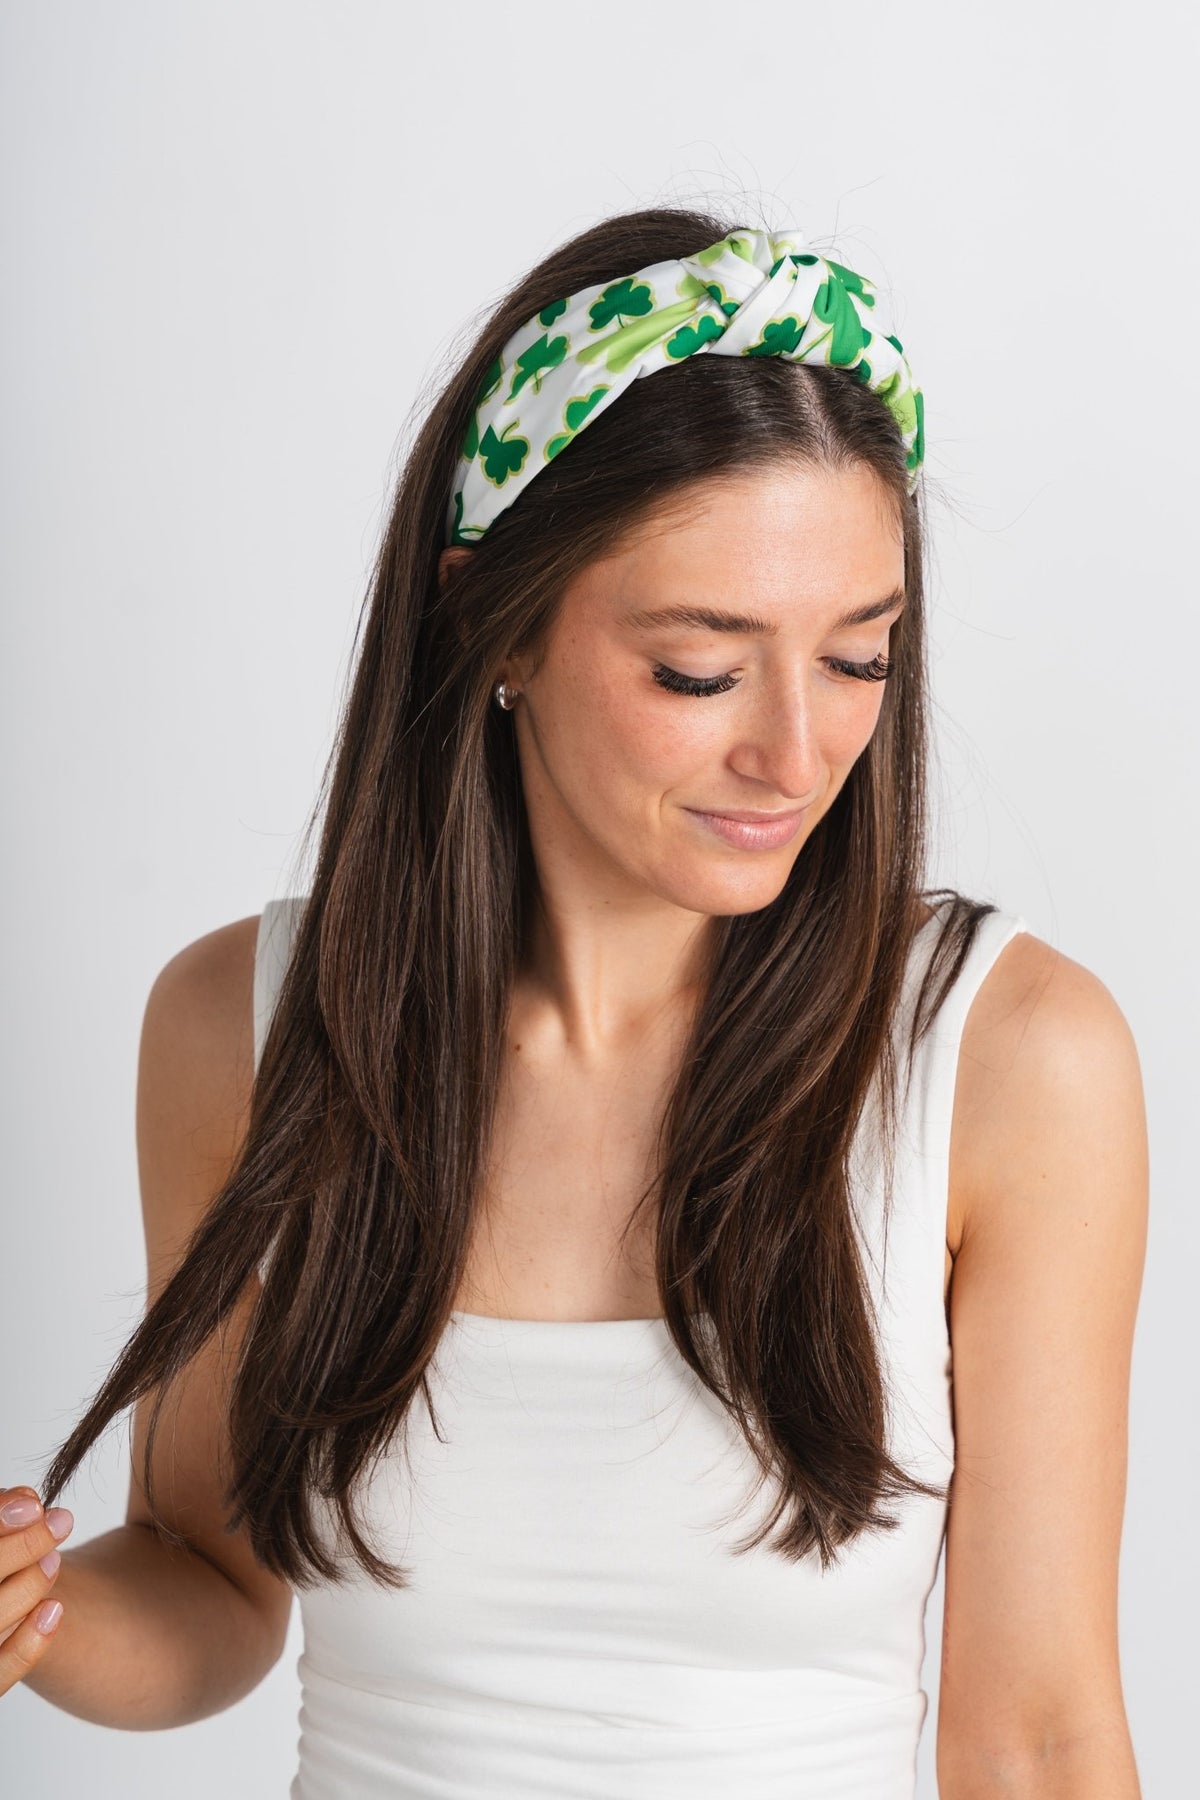 Luck of the Irish headband green - Trendy headband - Cute Hair Accessories at Lush Fashion Lounge Boutique in Oklahoma City